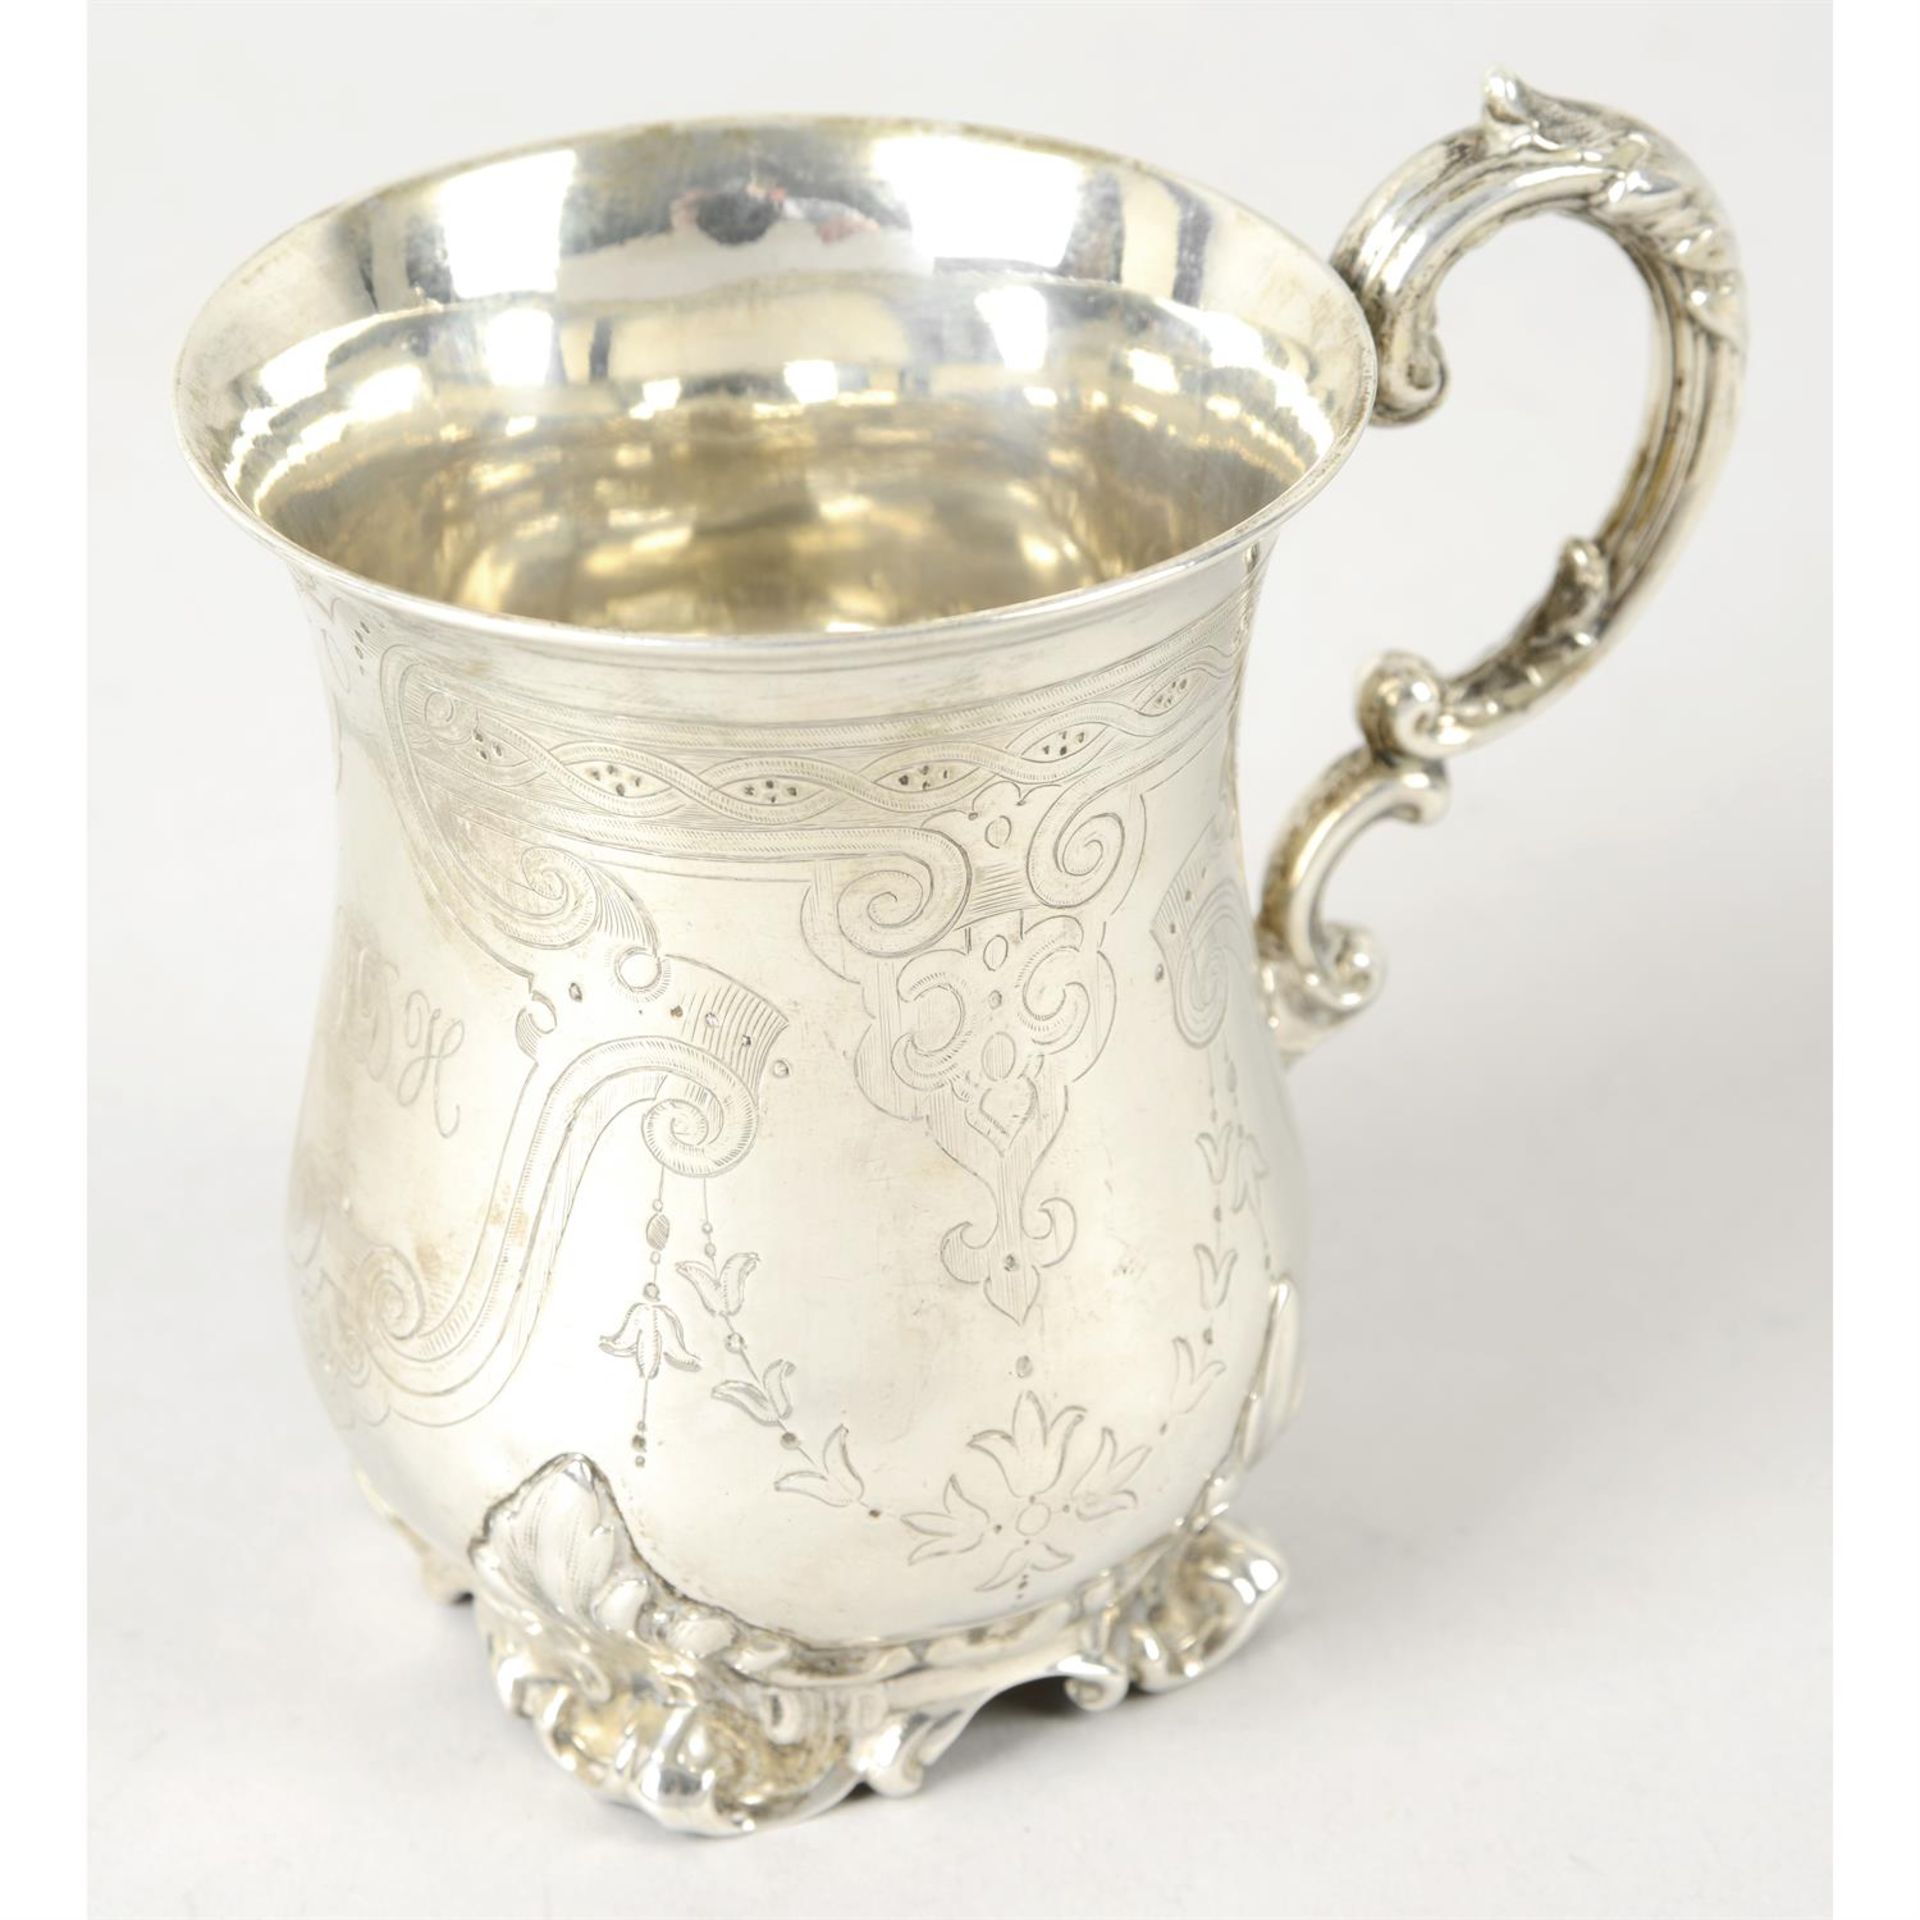 A Victorian silver christening mug.